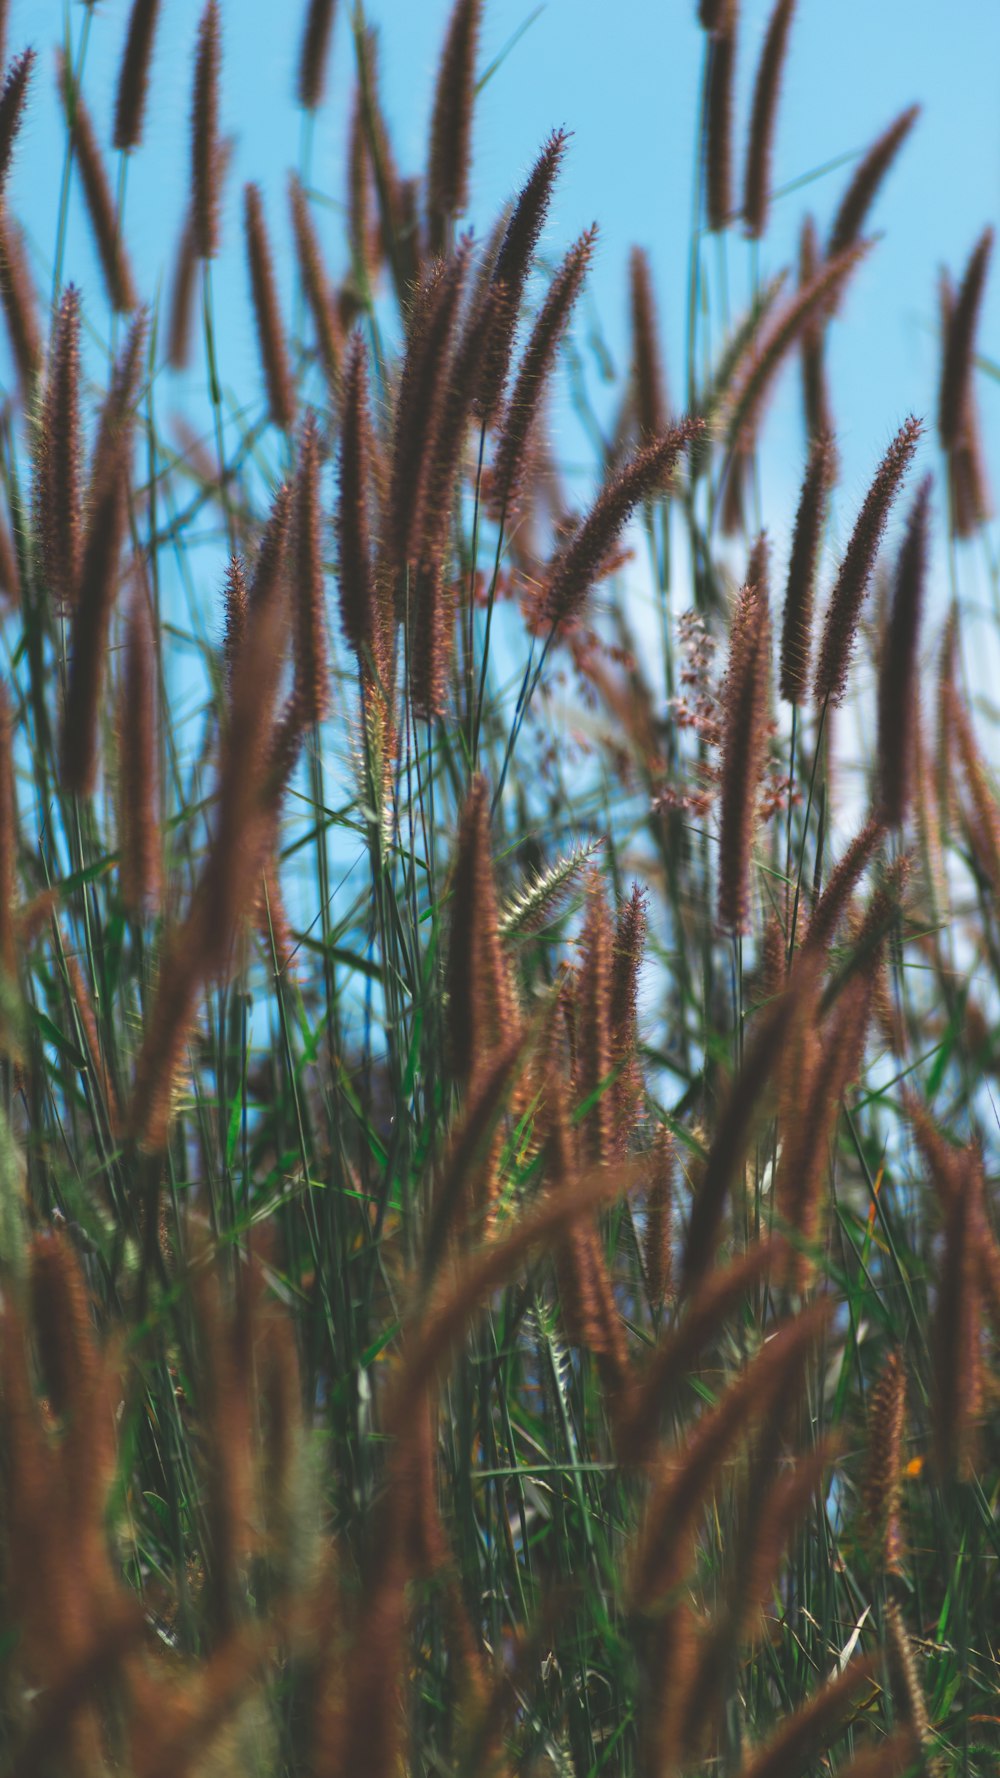 shallow focus photo of wheat